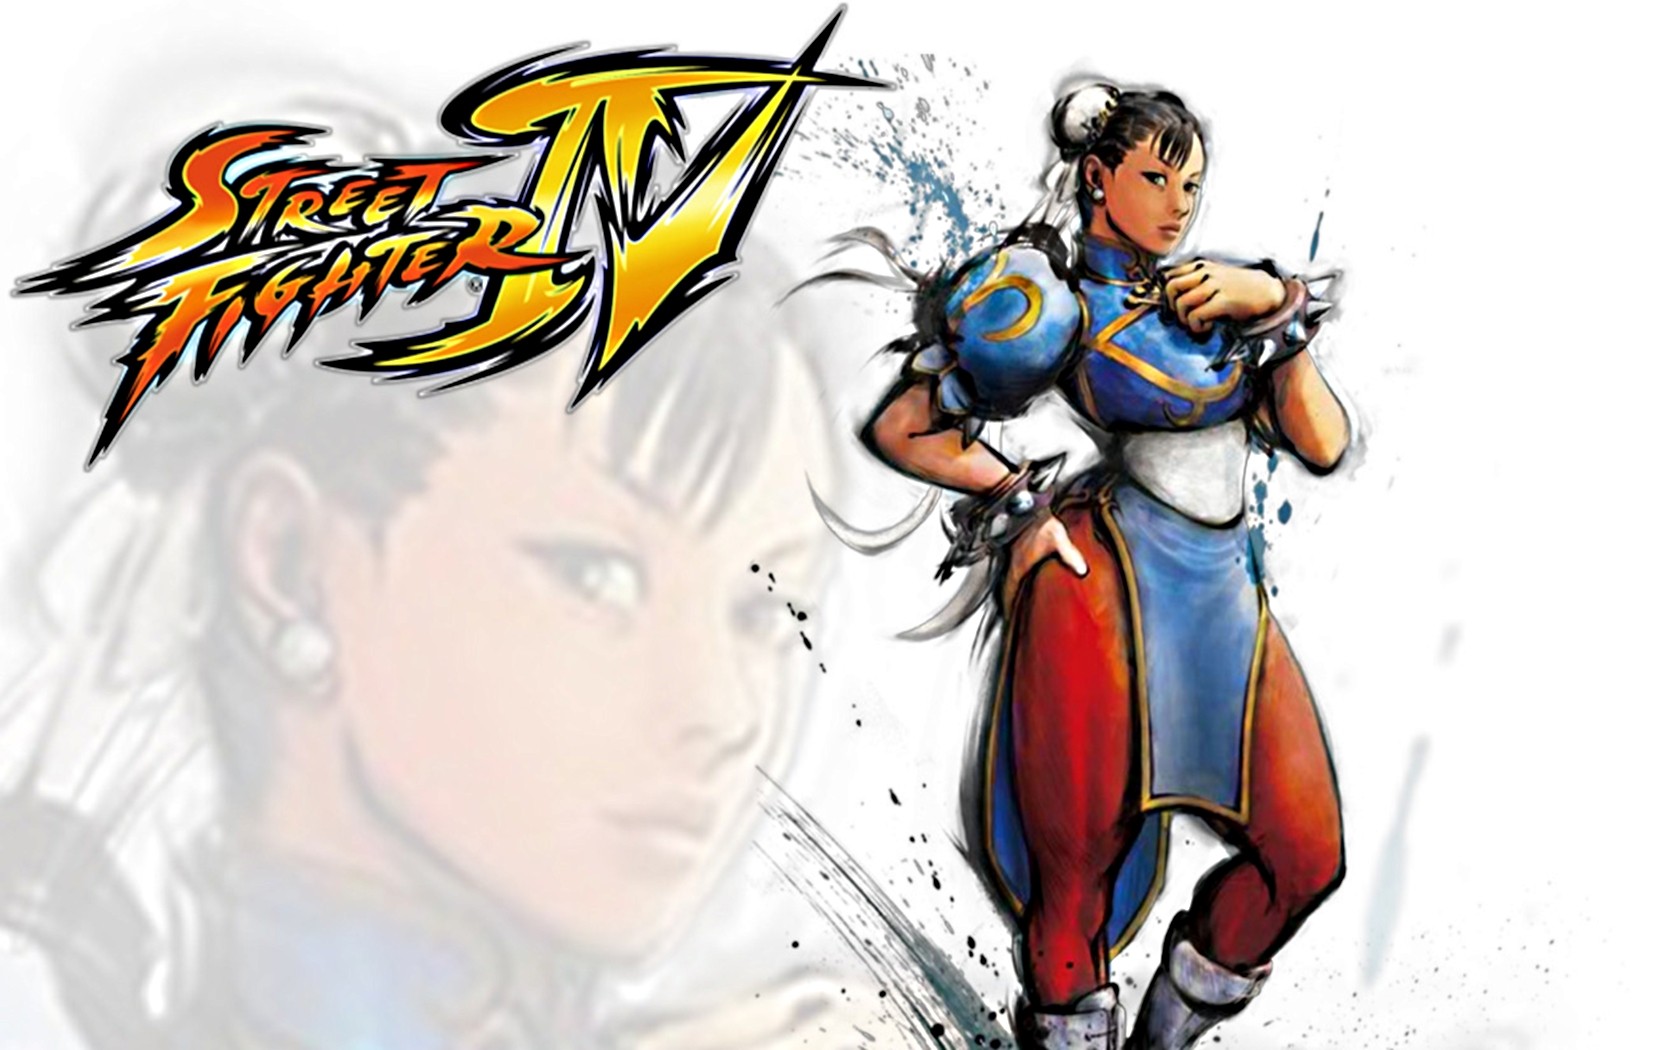 General 1680x1050 Street Fighter Street Fighter IV video games video game art video game warriors video game girls